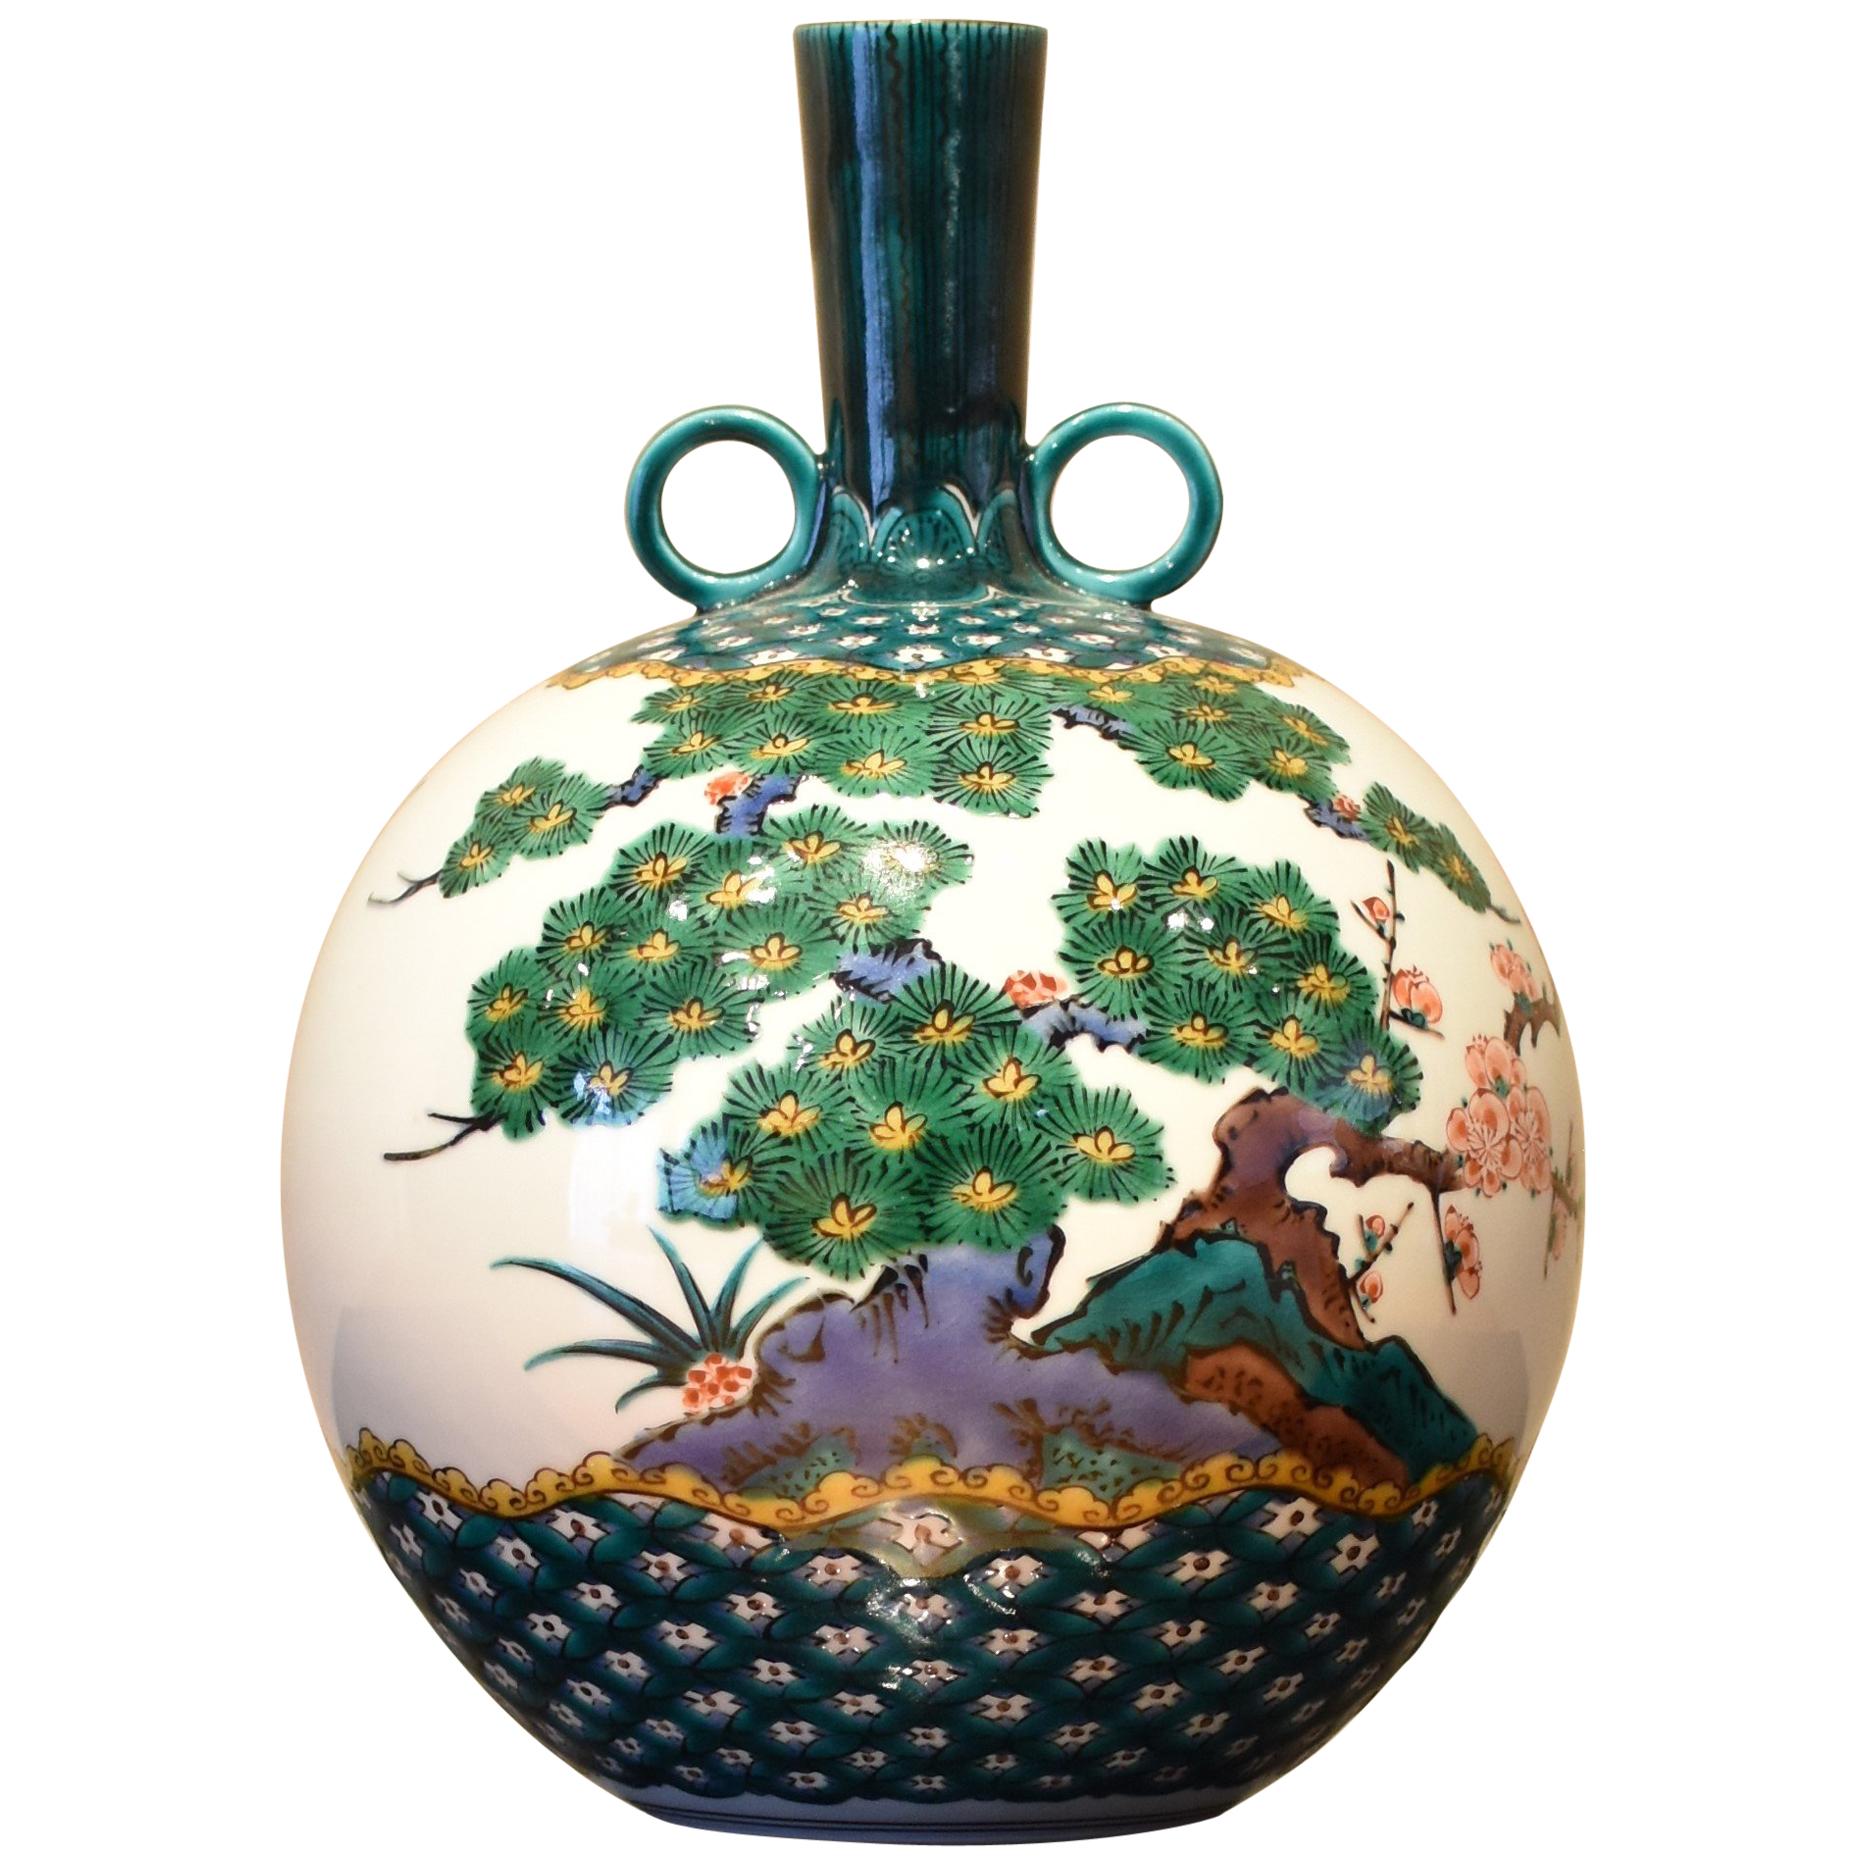 Japanese Contemporary Green Kutani Decorative Porcelain Vase by Master Artist